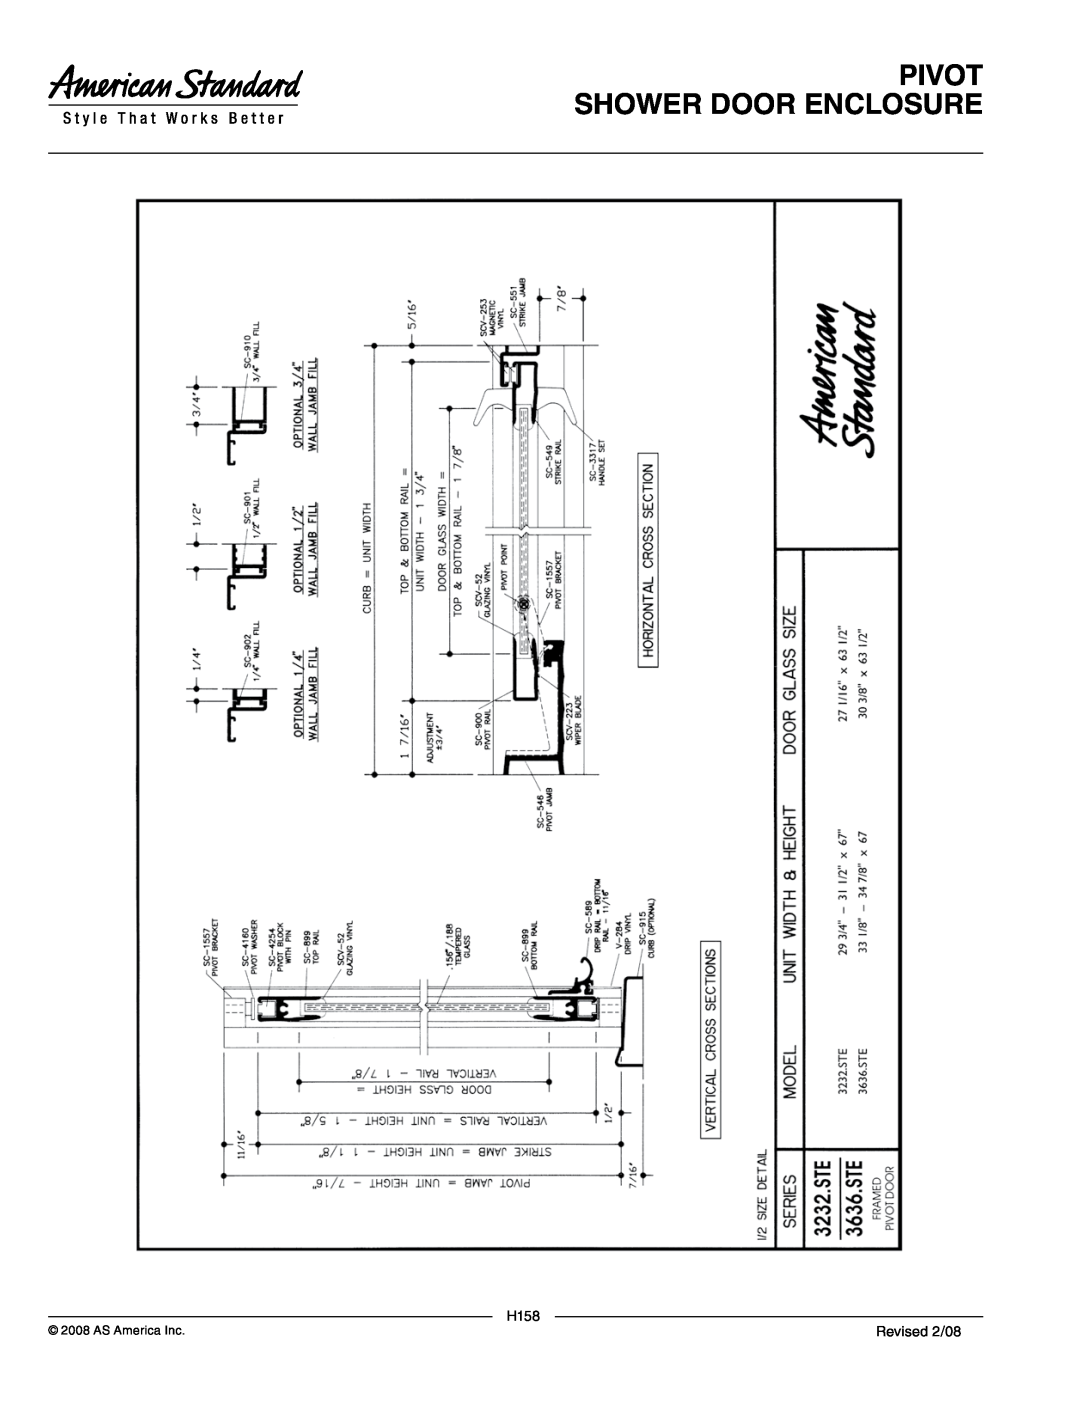 American Standard 3232.STE5, 3636.STE2, 3636.STE5, 3232.STE2 Pivot Shower Door Enclosure, H158, Revised 2/08, AS America Inc 